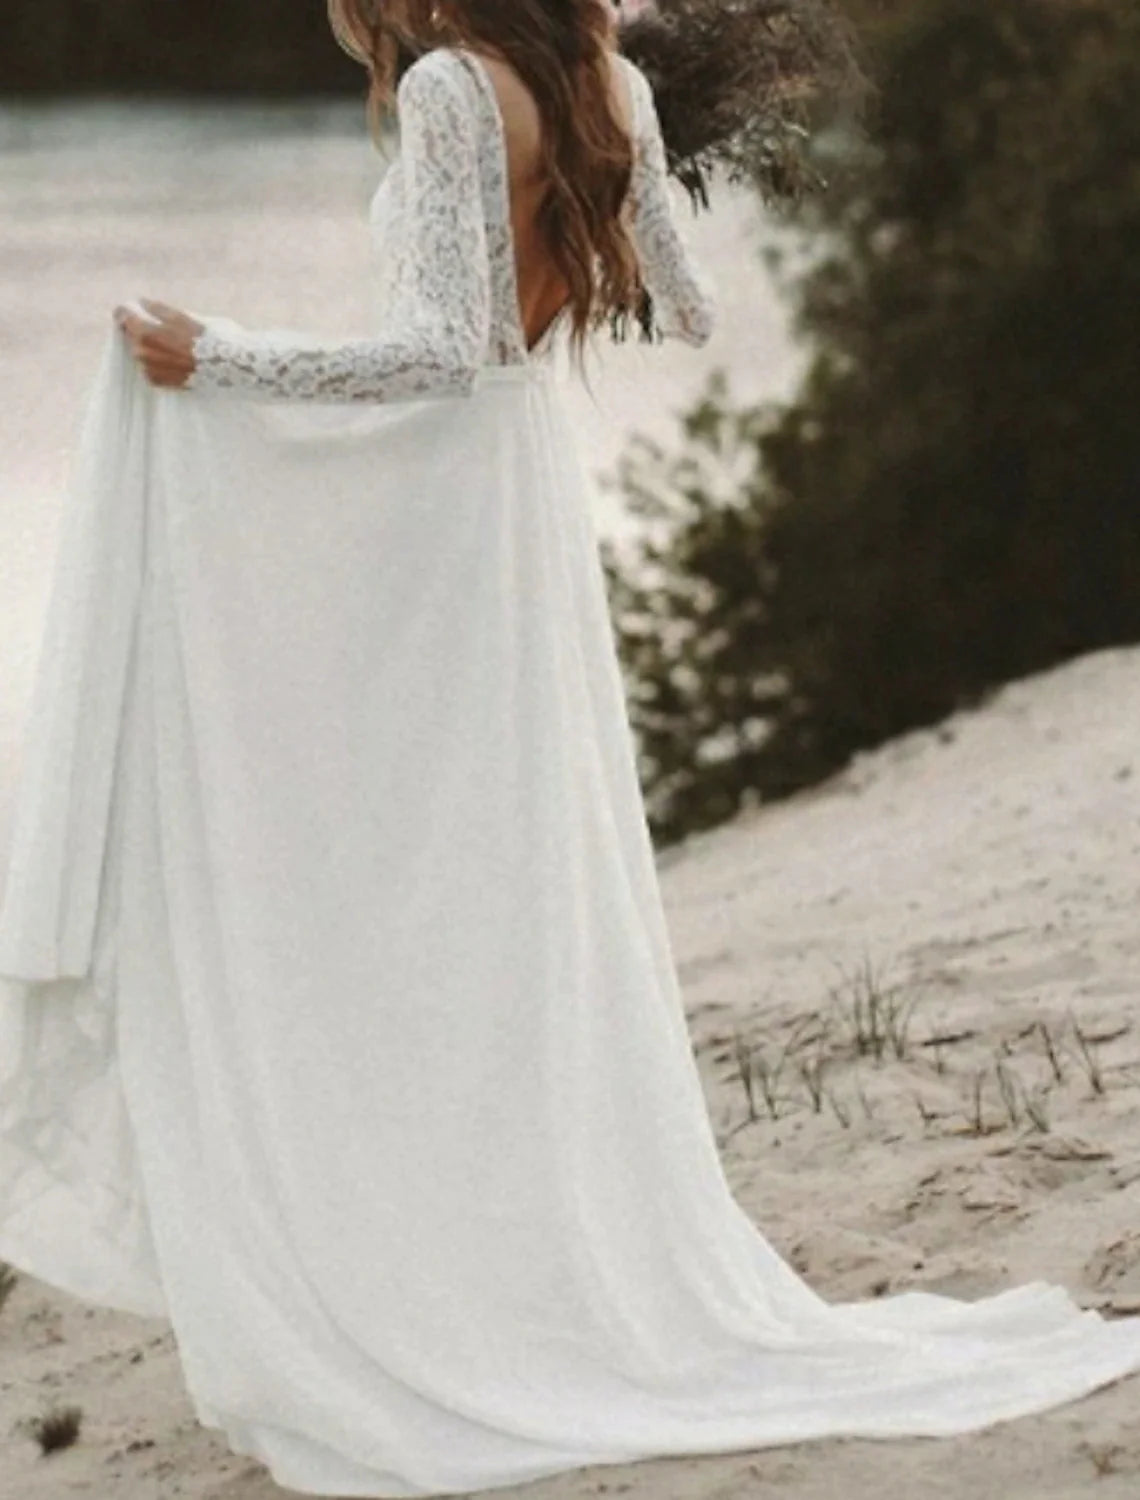 Beach Boho Wedding Dresses A-Line V Neck Long Sleeve Sweep / Brush Train Chiffon Bridal Gowns With